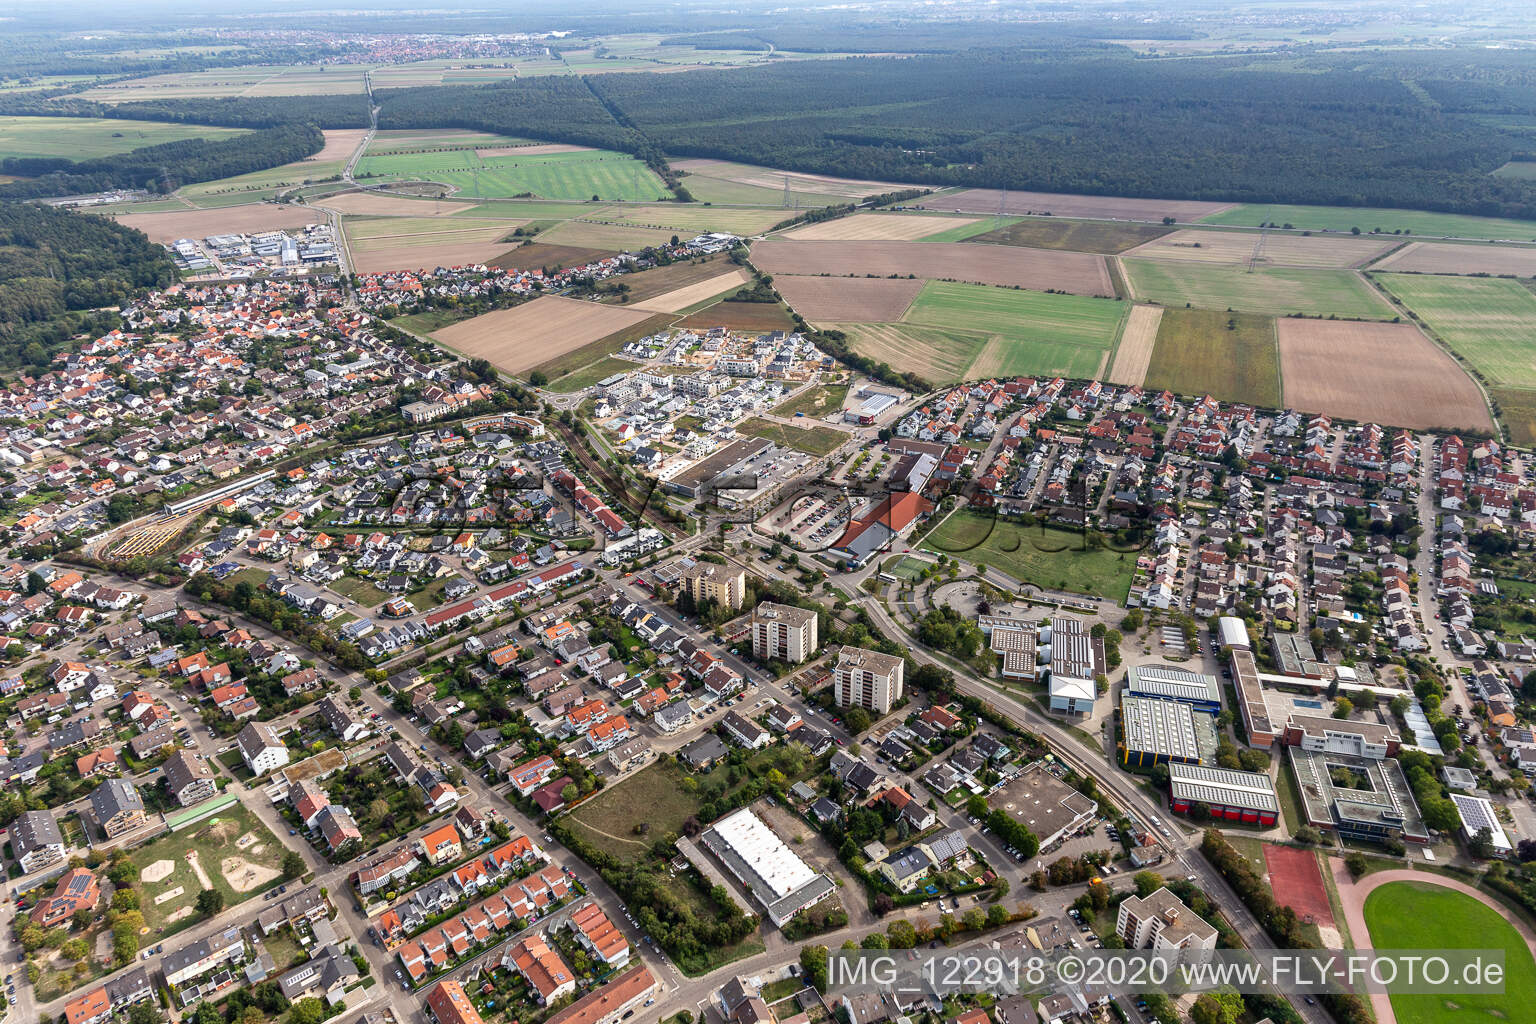 Drone recording of District Linkenheim in Linkenheim-Hochstetten in the state Baden-Wuerttemberg, Germany